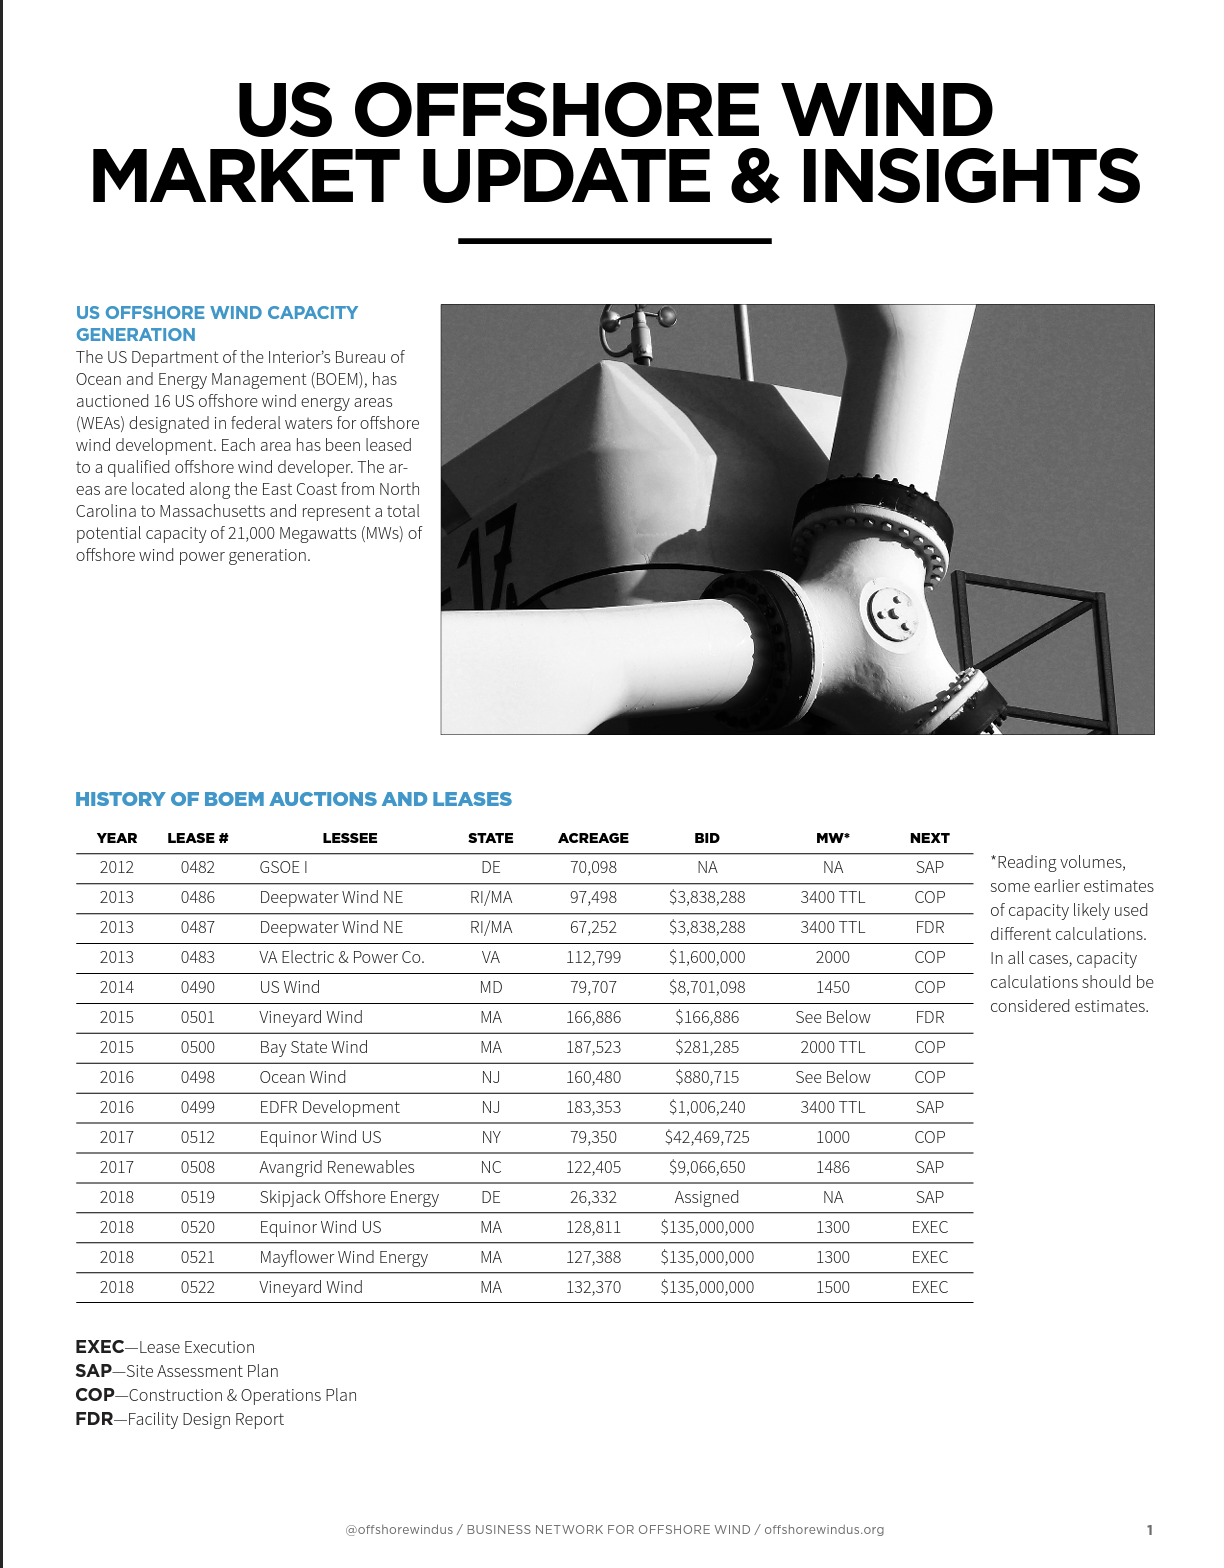 Featured Image: 2019 U.S. Offshore Wind Market Update & Insights